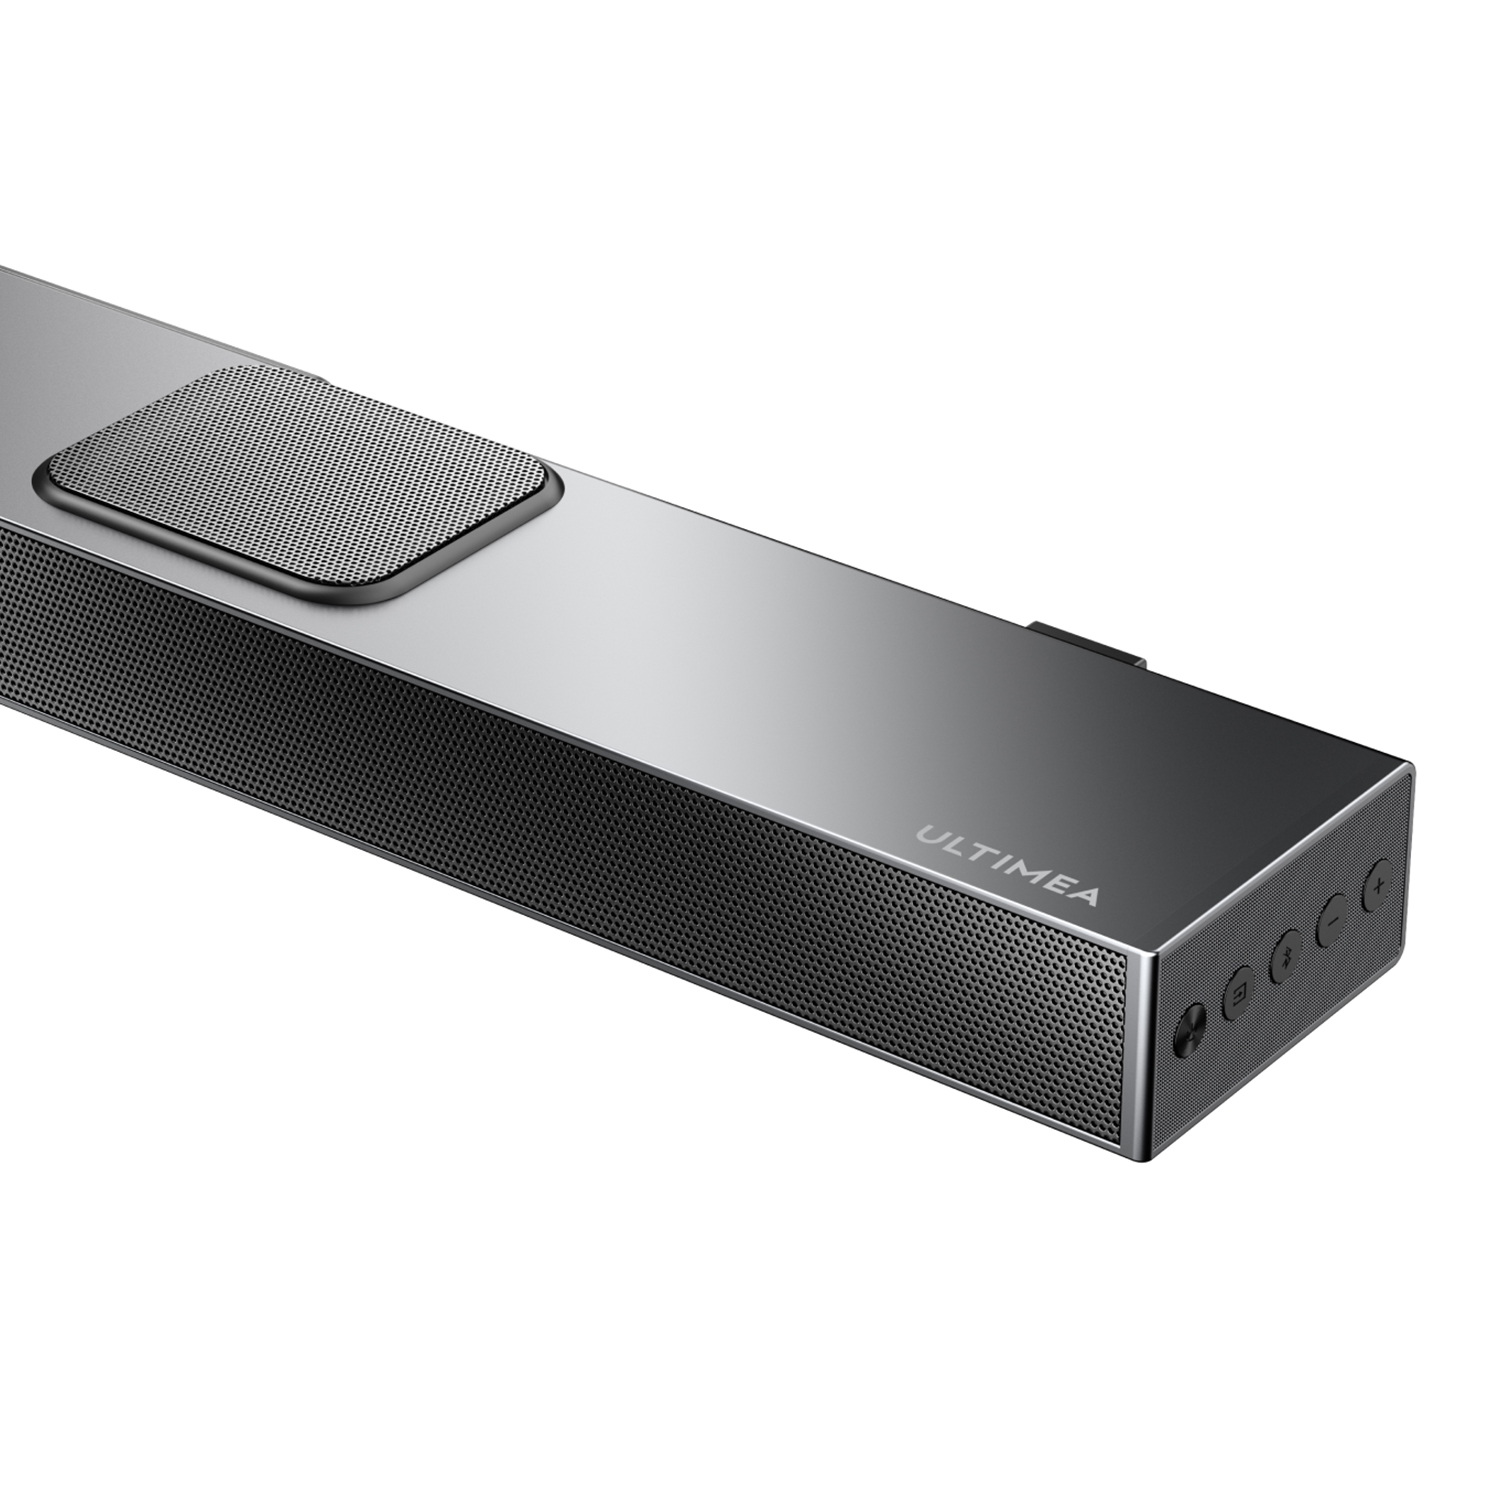 ULTIMEA Nova S70 - 3.1.2 Soundbar, 390W Kanal Atmos Schwarz Dolby Spitzenleistung, Soundbar